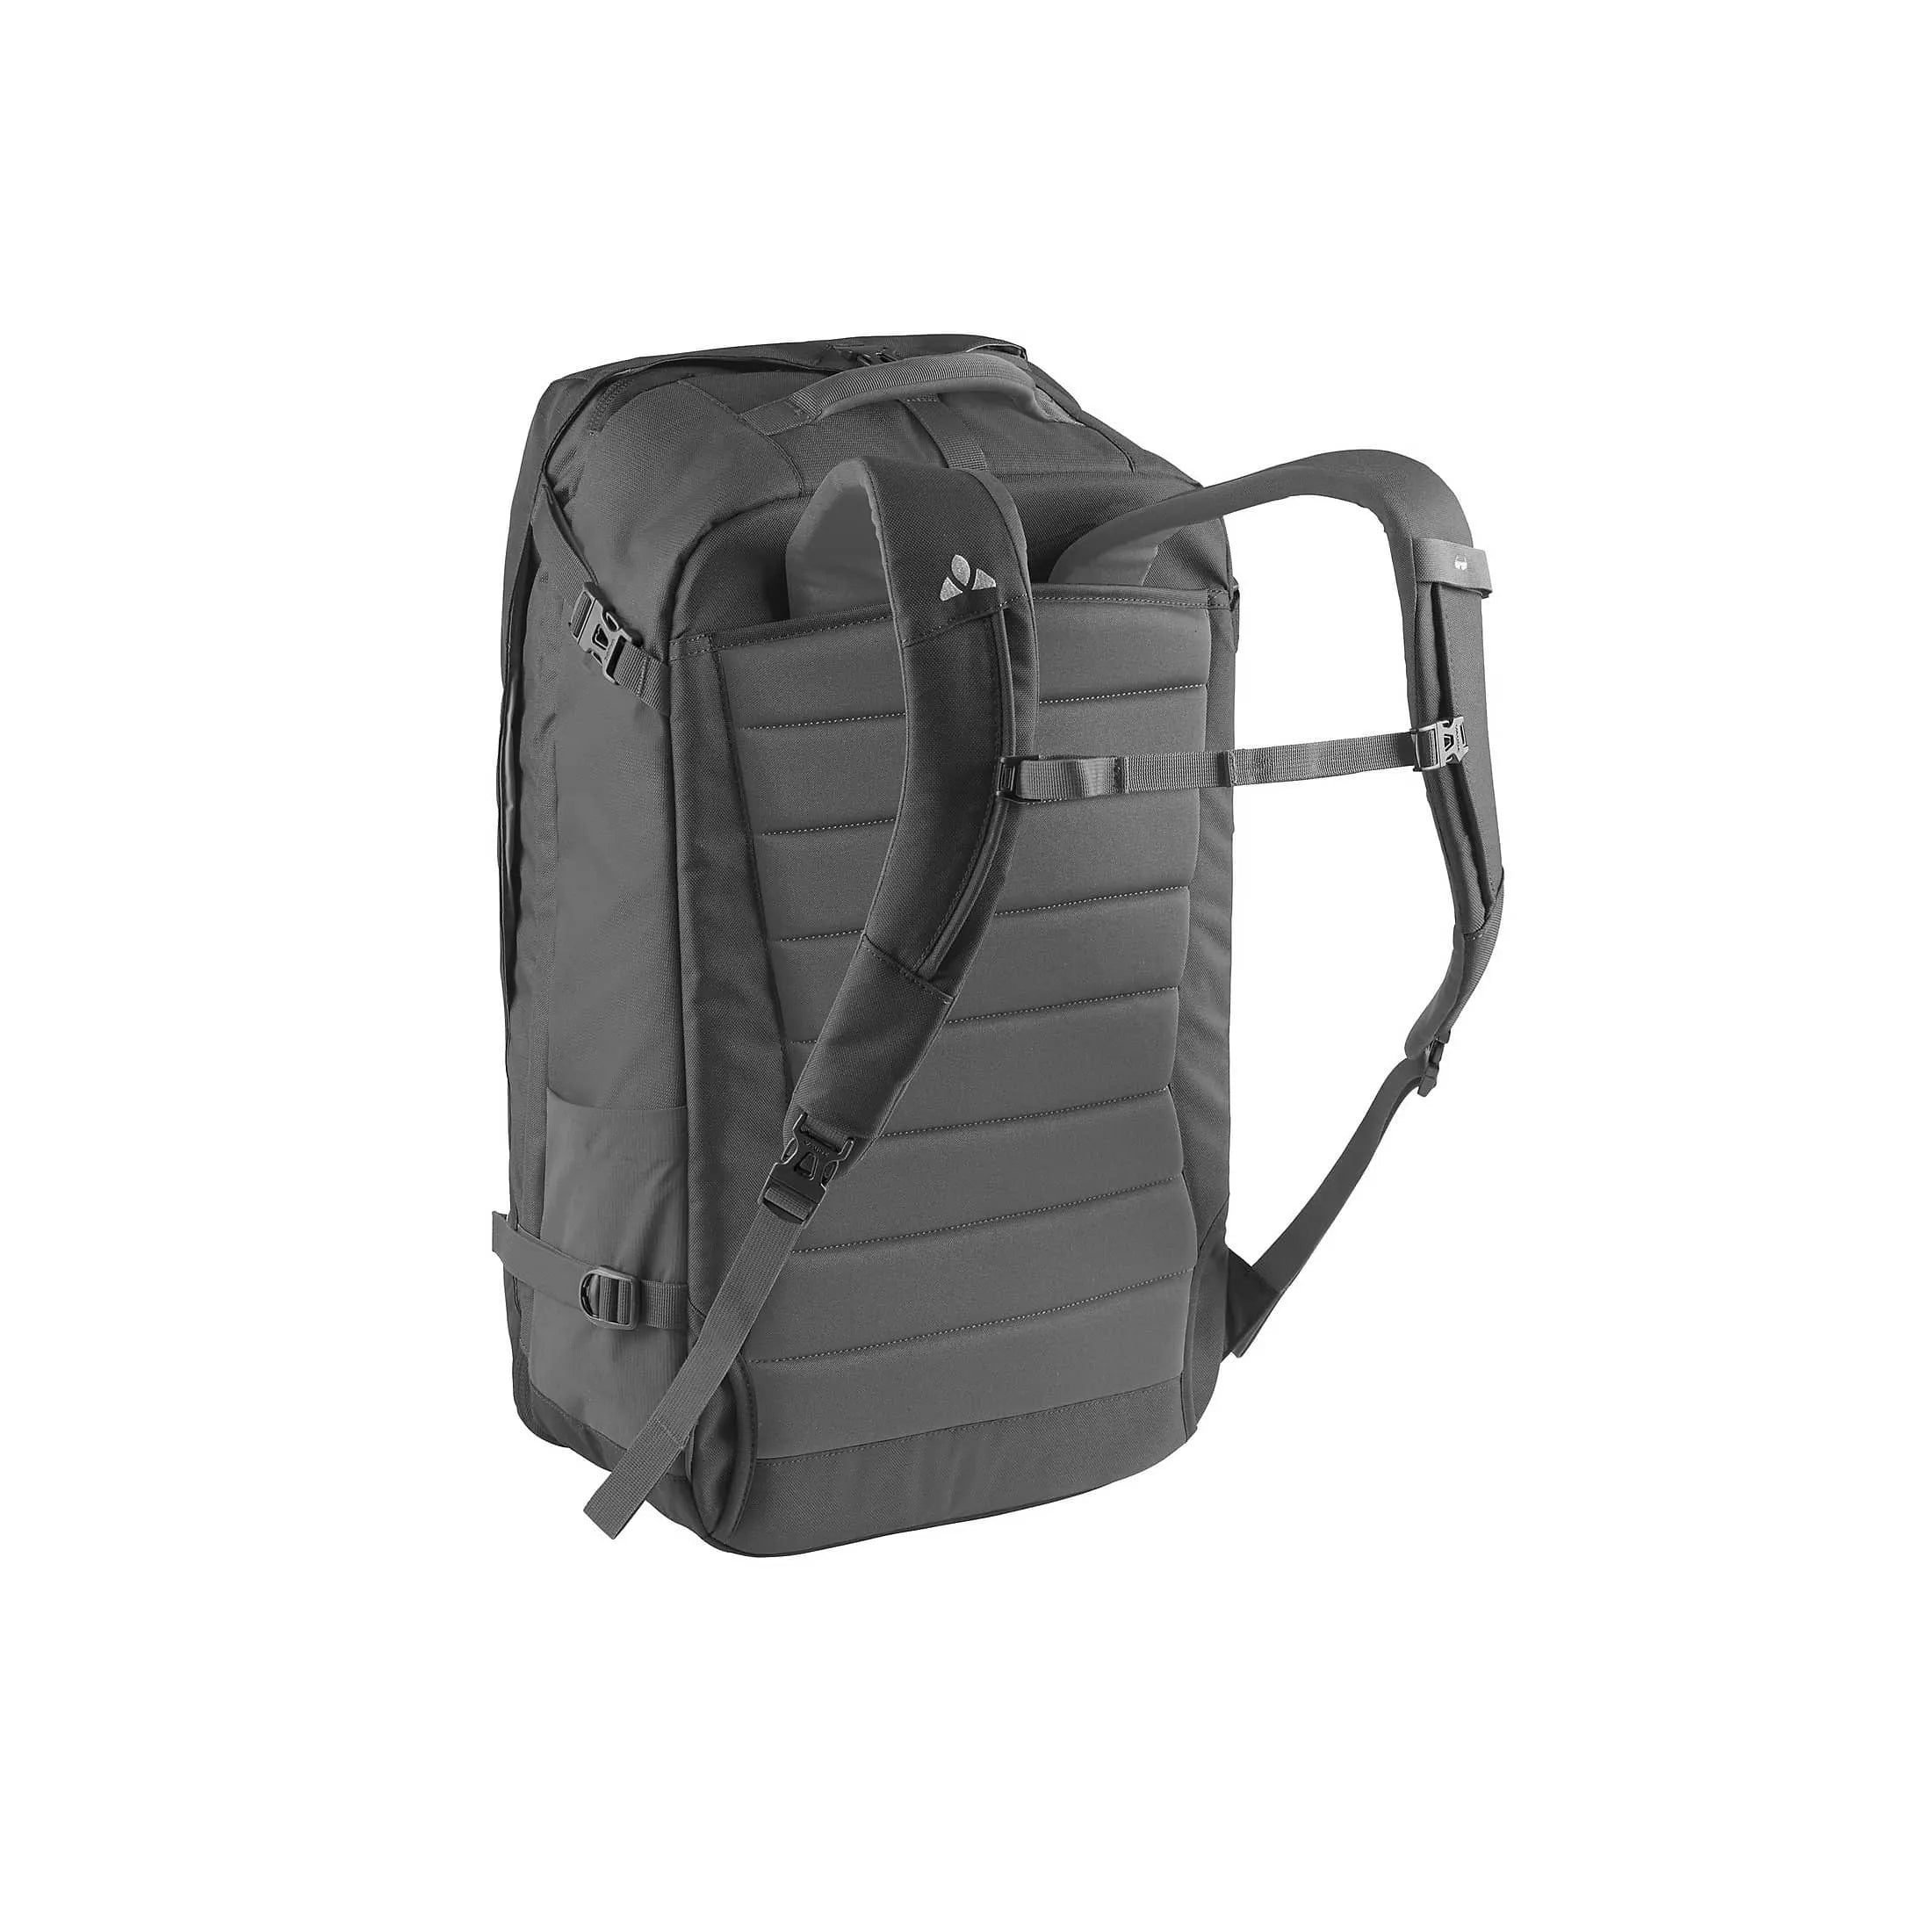 Vaude Backpacks Mundo Carry-On 38 55 cm - black